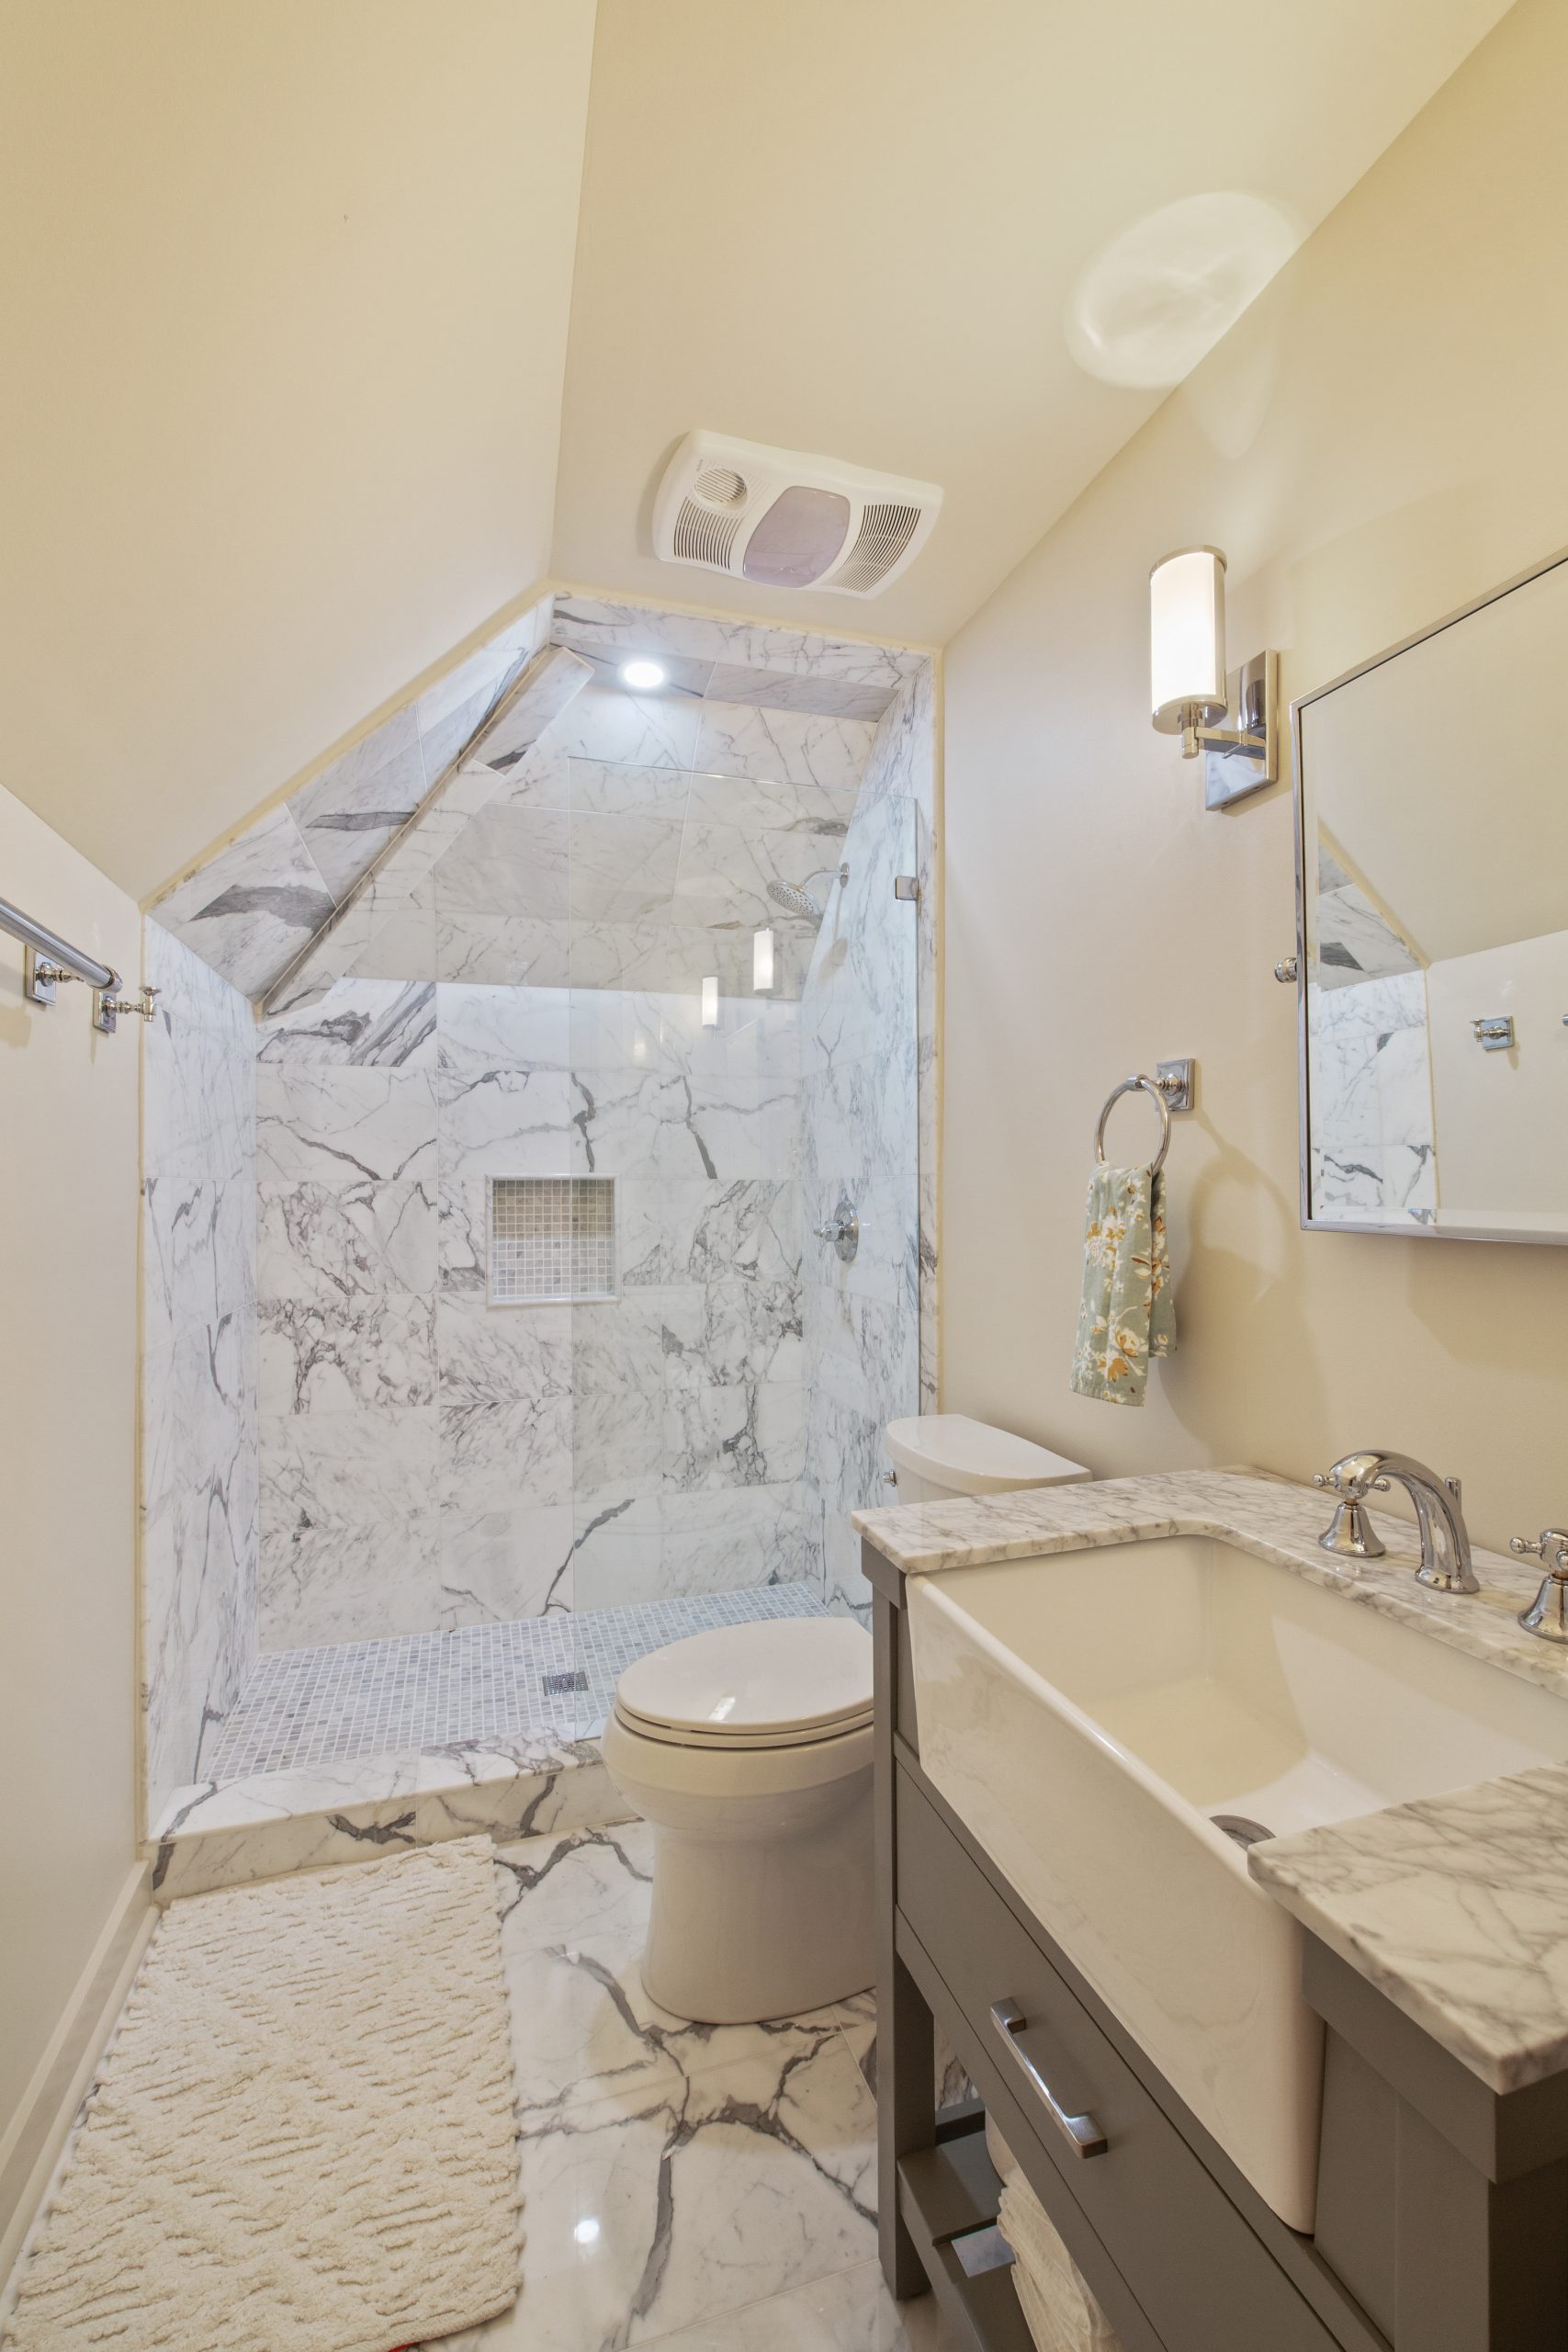 Neslo House Luxury Bathroom Renovation designed and built by DMG Design+Build